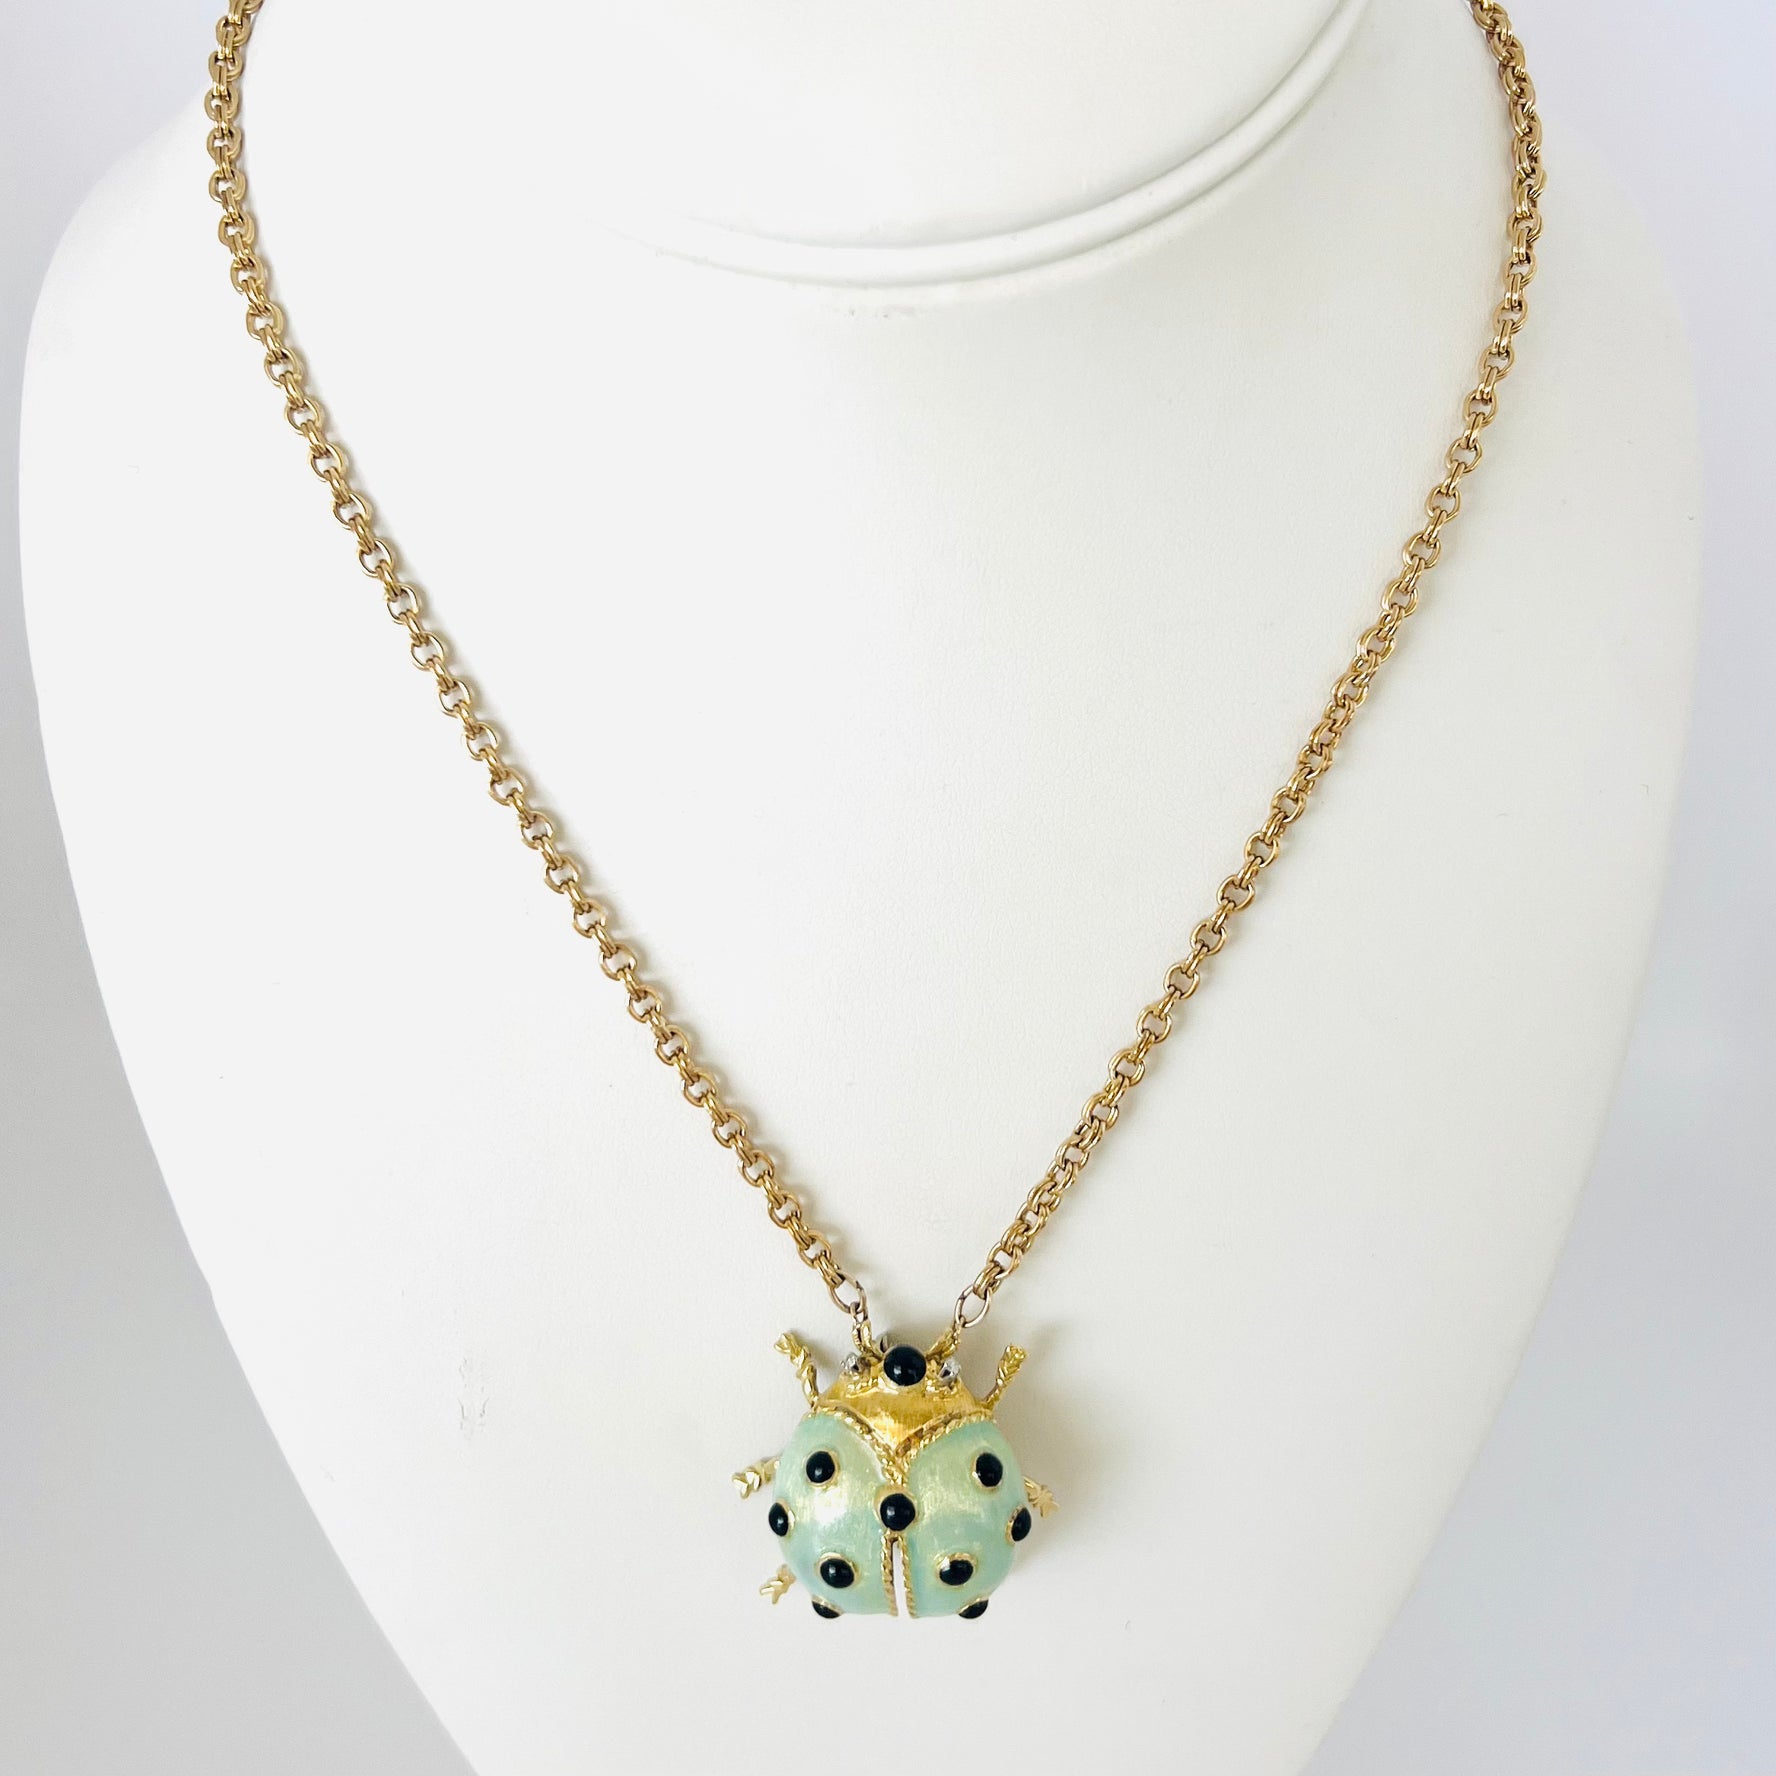 18k gold -filled chain necklace with vintage mint green enamel/diamond eye lady bug pendant